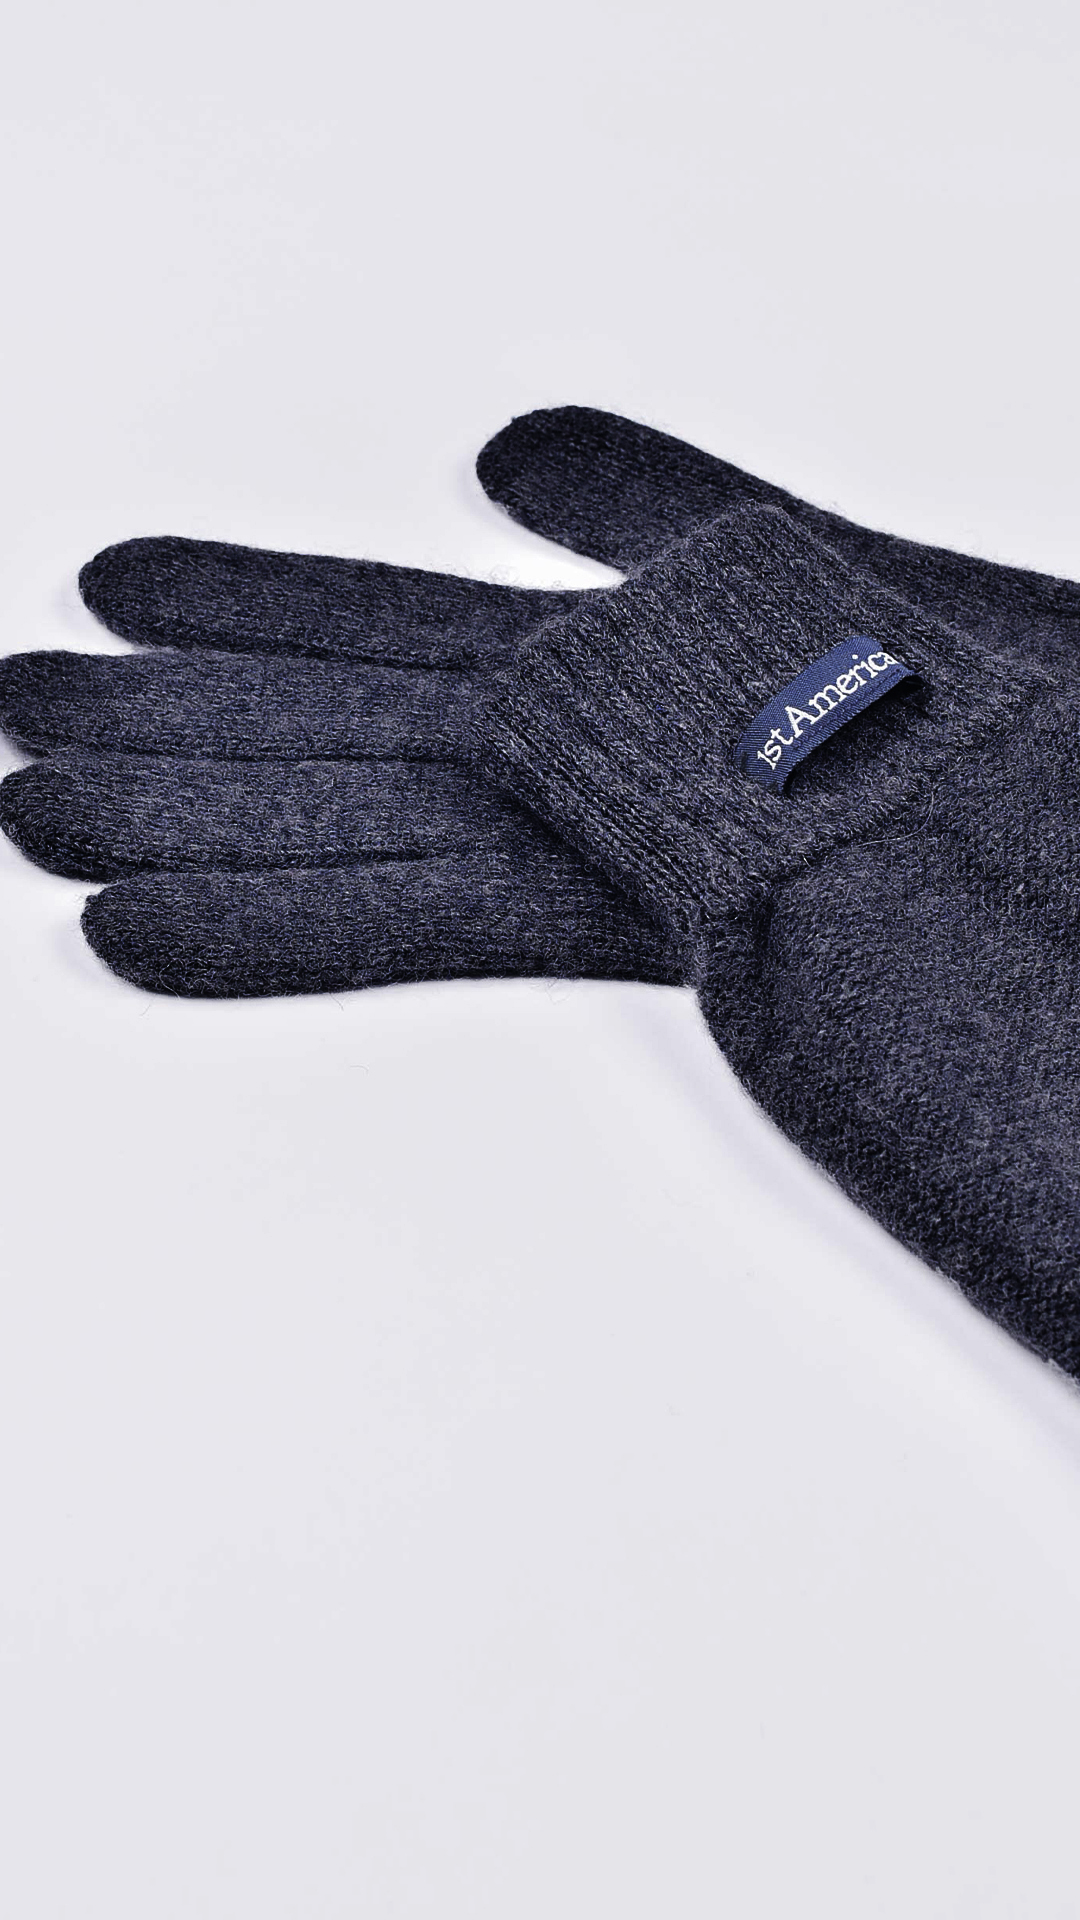 Glovesmixdario grigio m 3 1stAmerican guanti in lana e cashmere da uomo Made in Italy - caldi guanti invernali